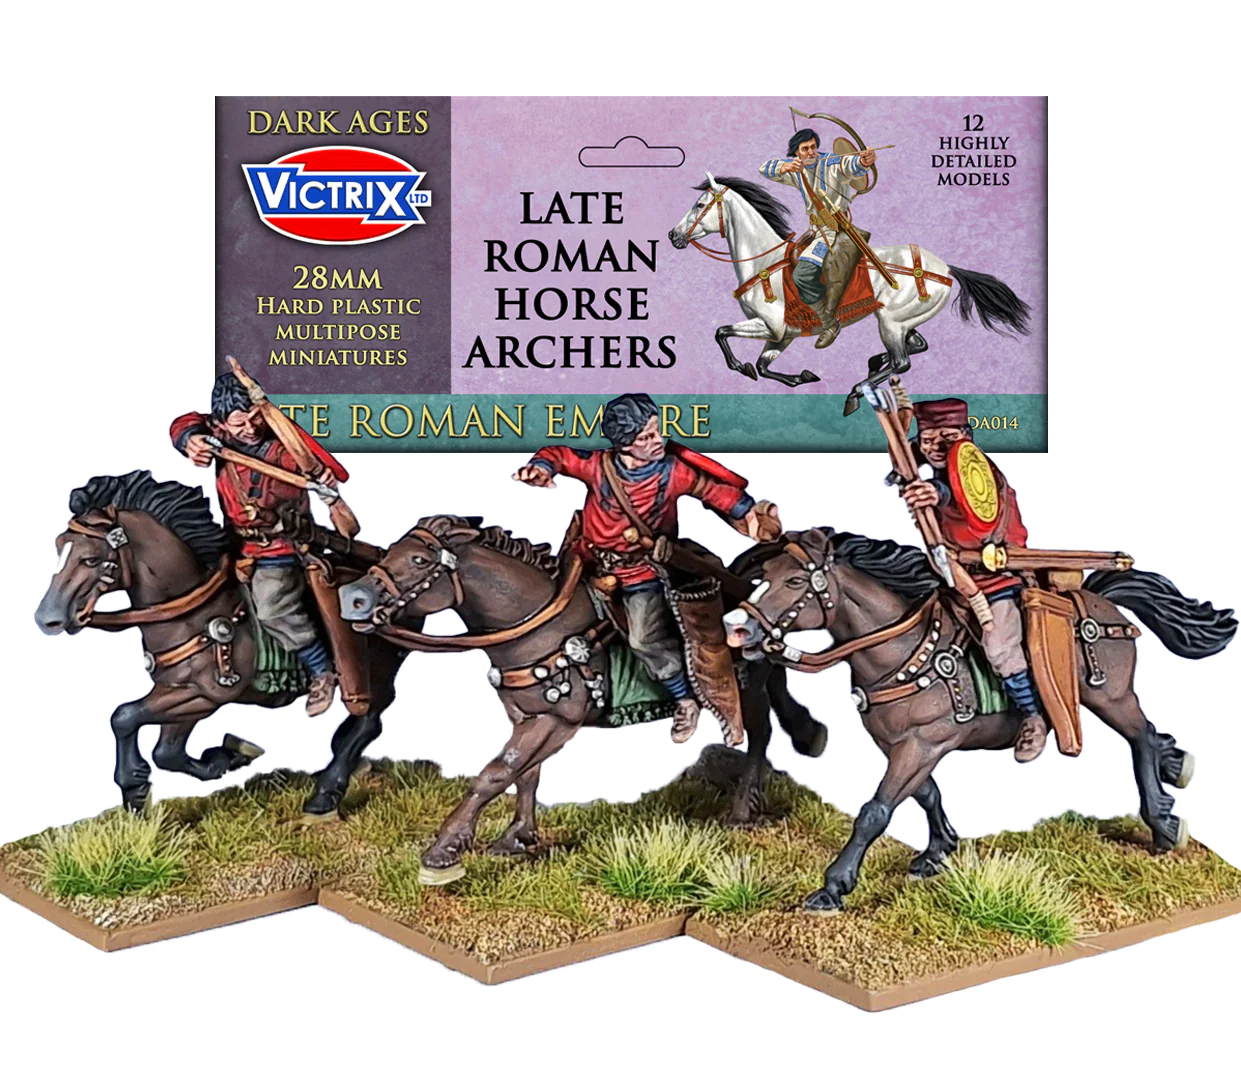 Victrix VXDA014 Late Roman Horse Archers 1